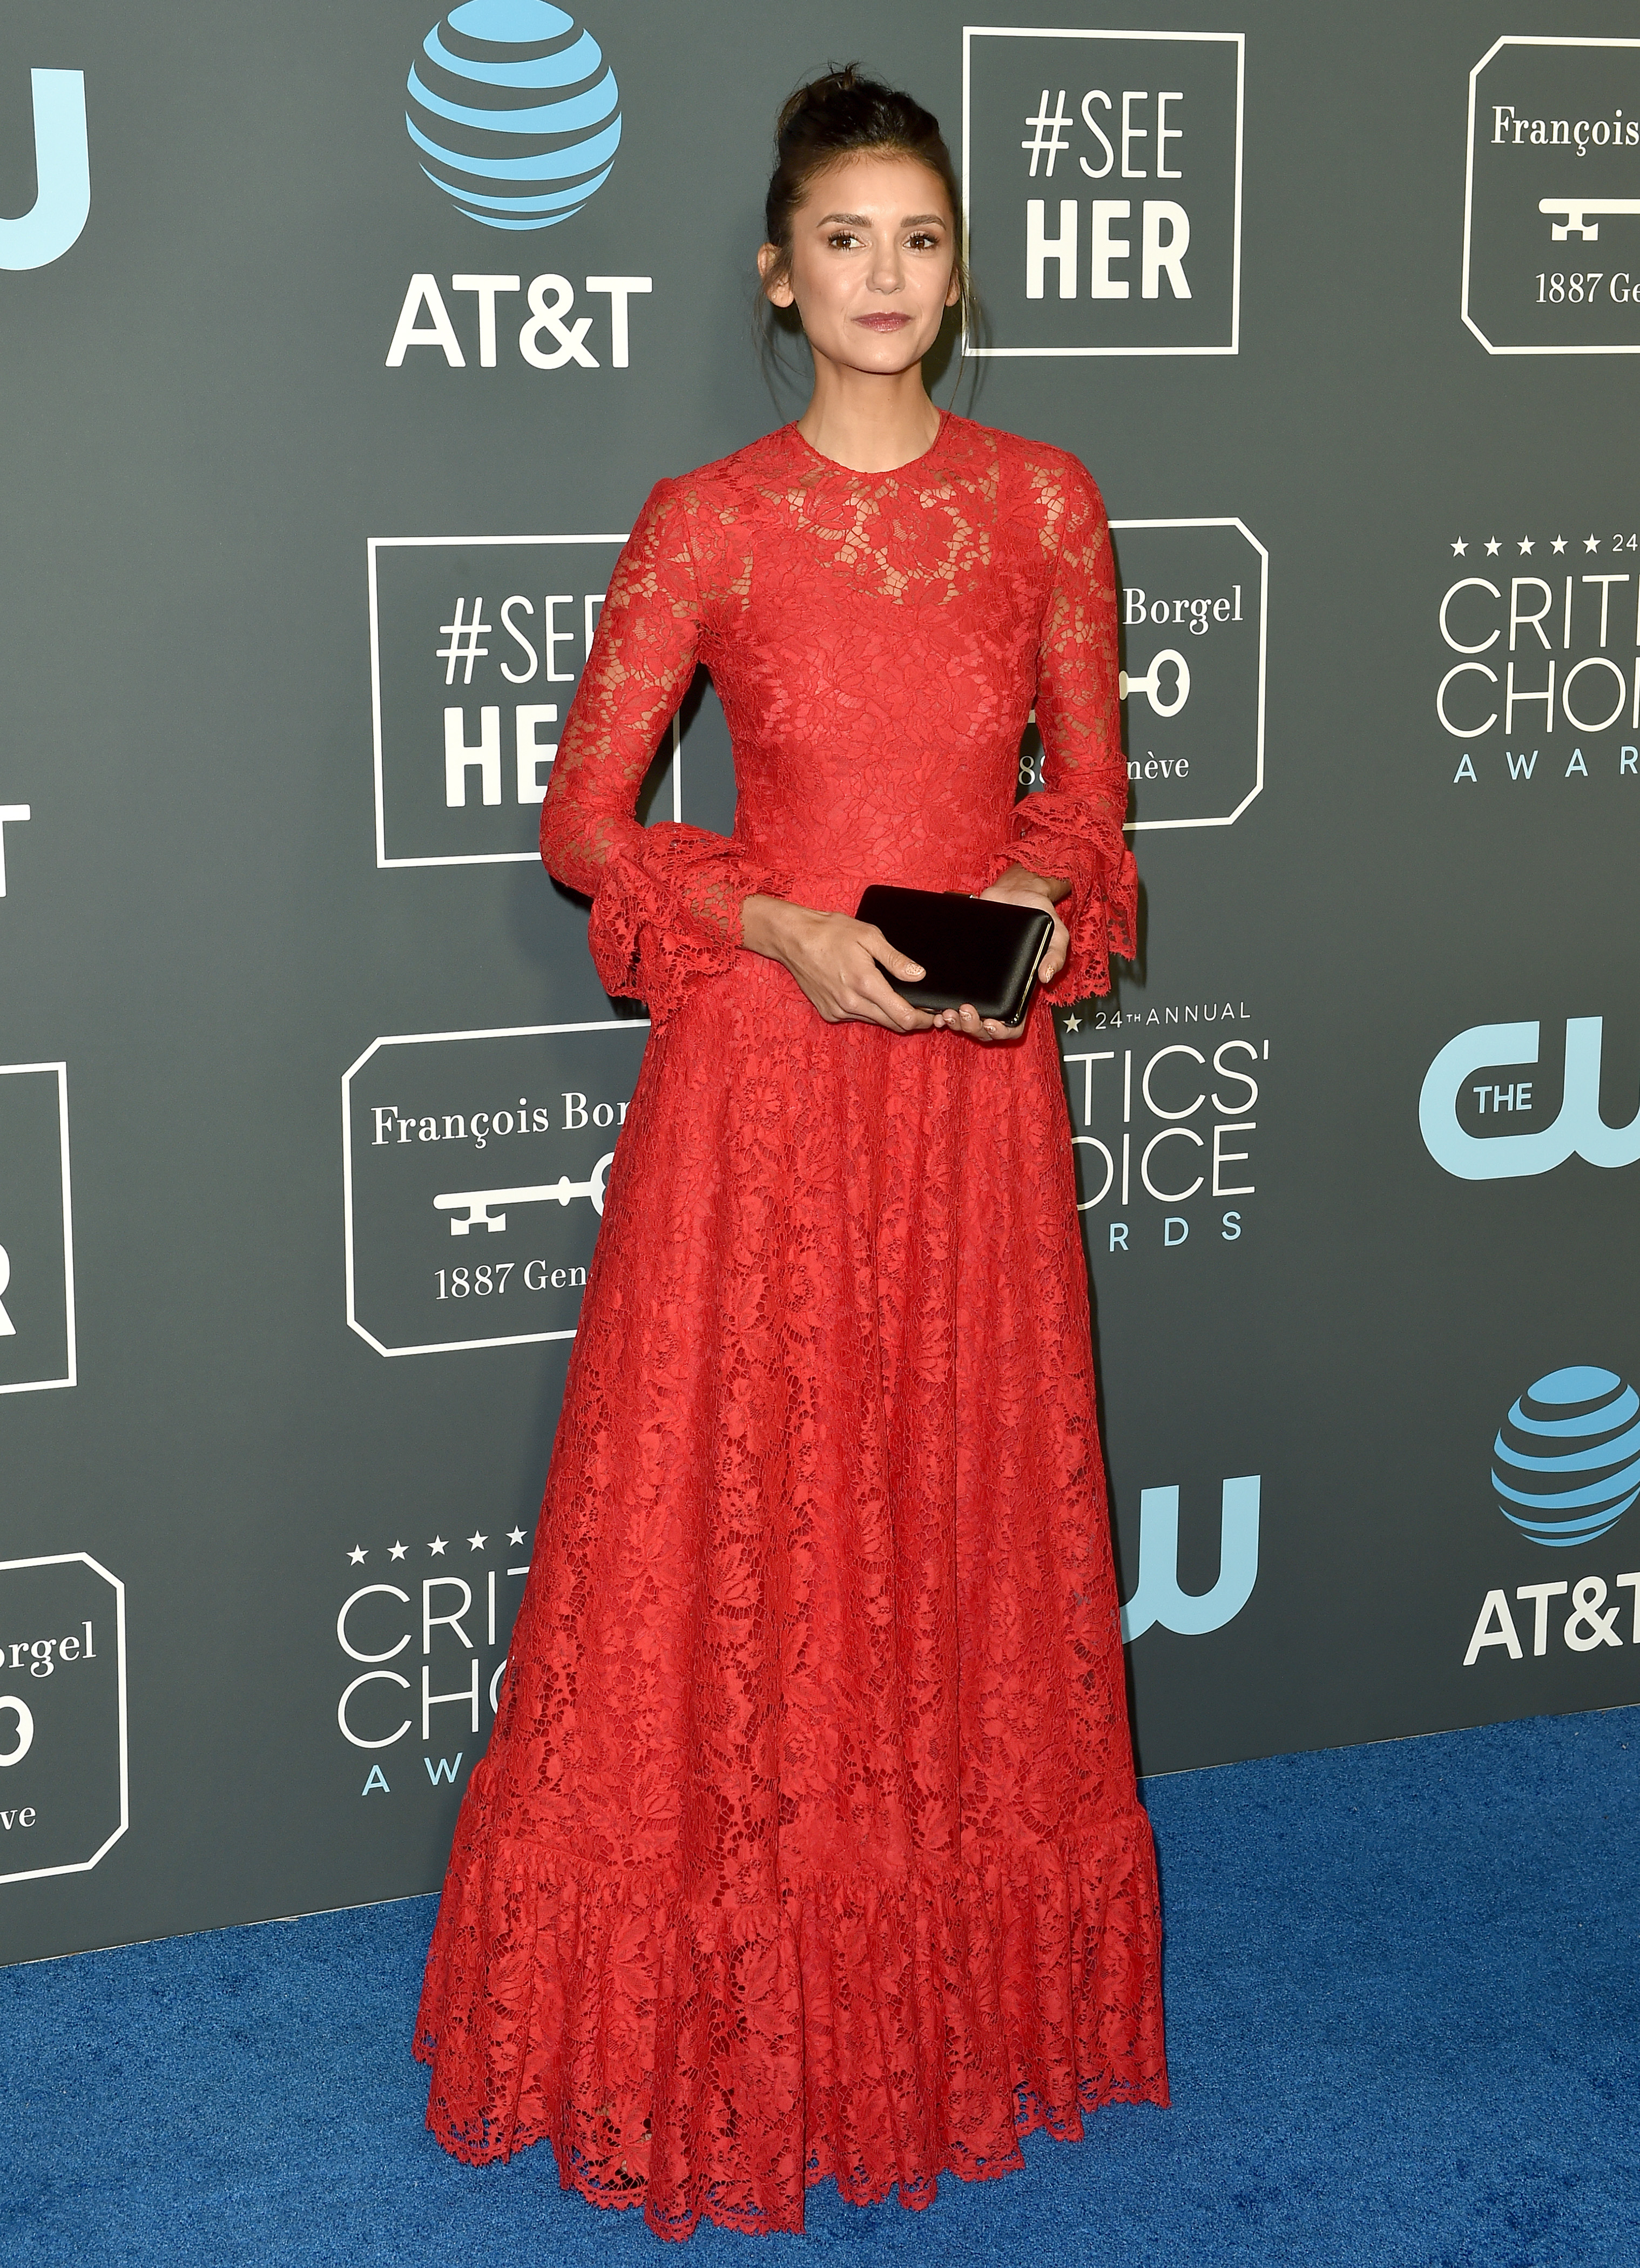 Celebrities wearing red dresses